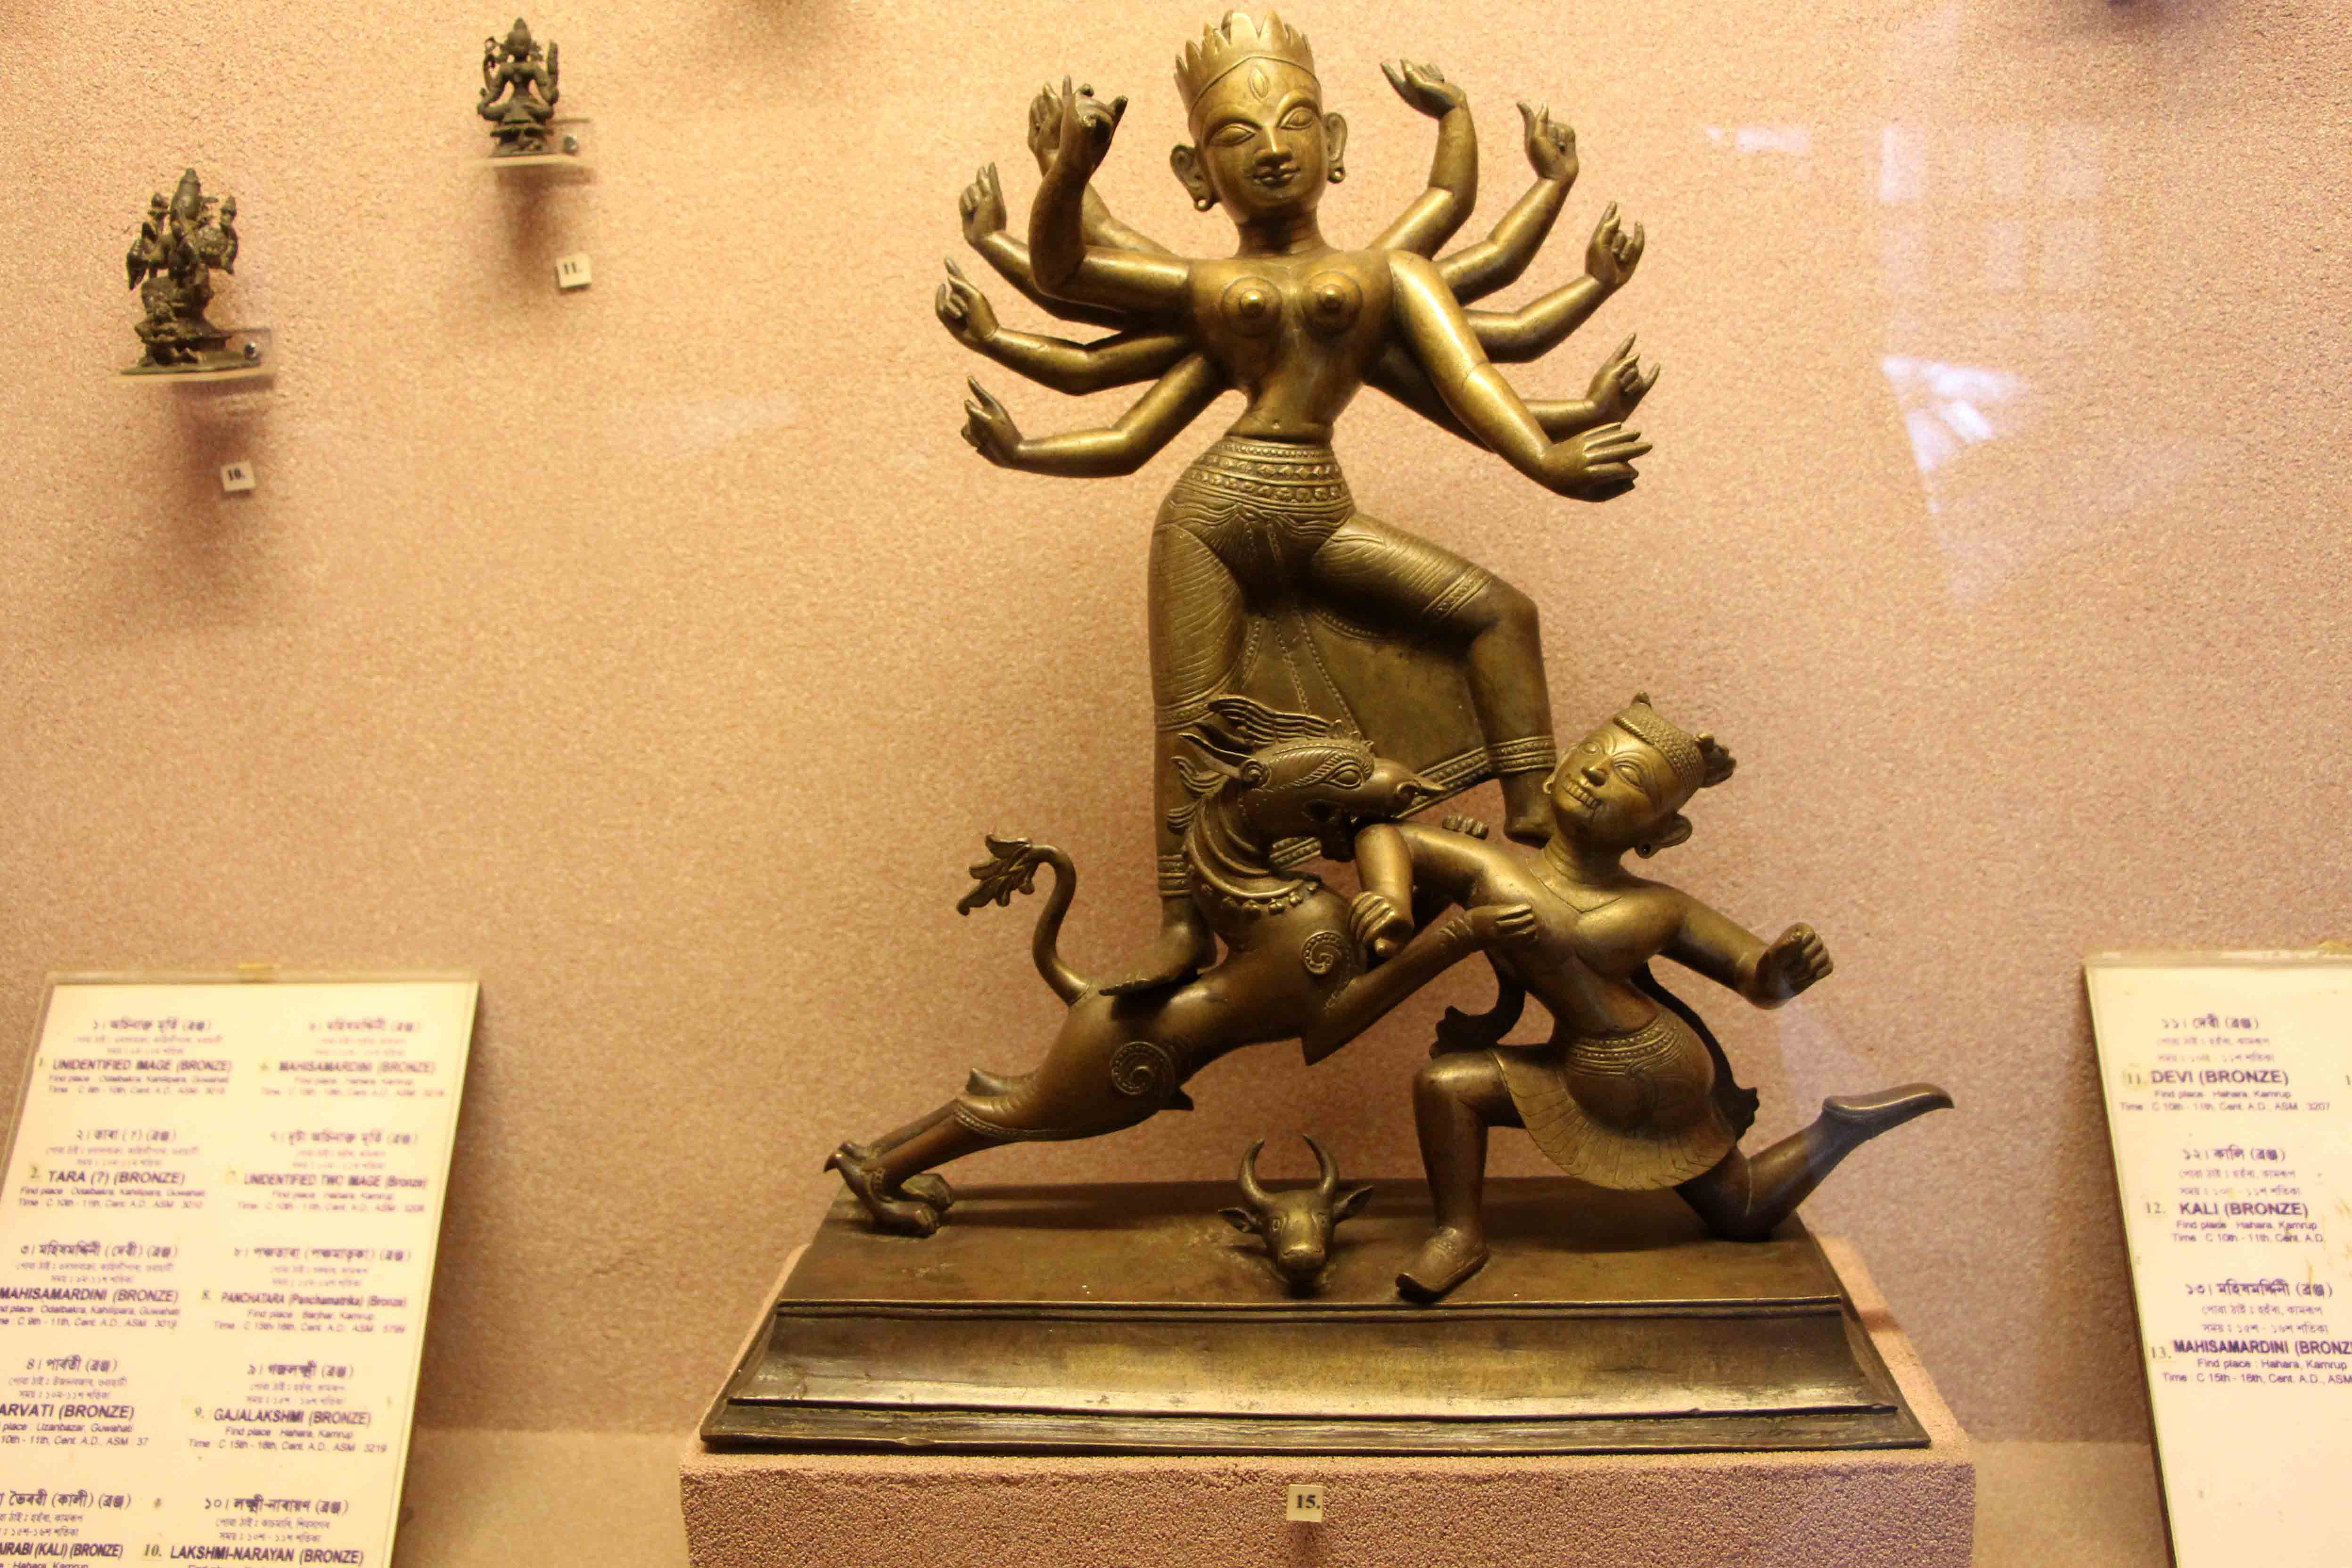 A statue of Goddess Durga in bronze